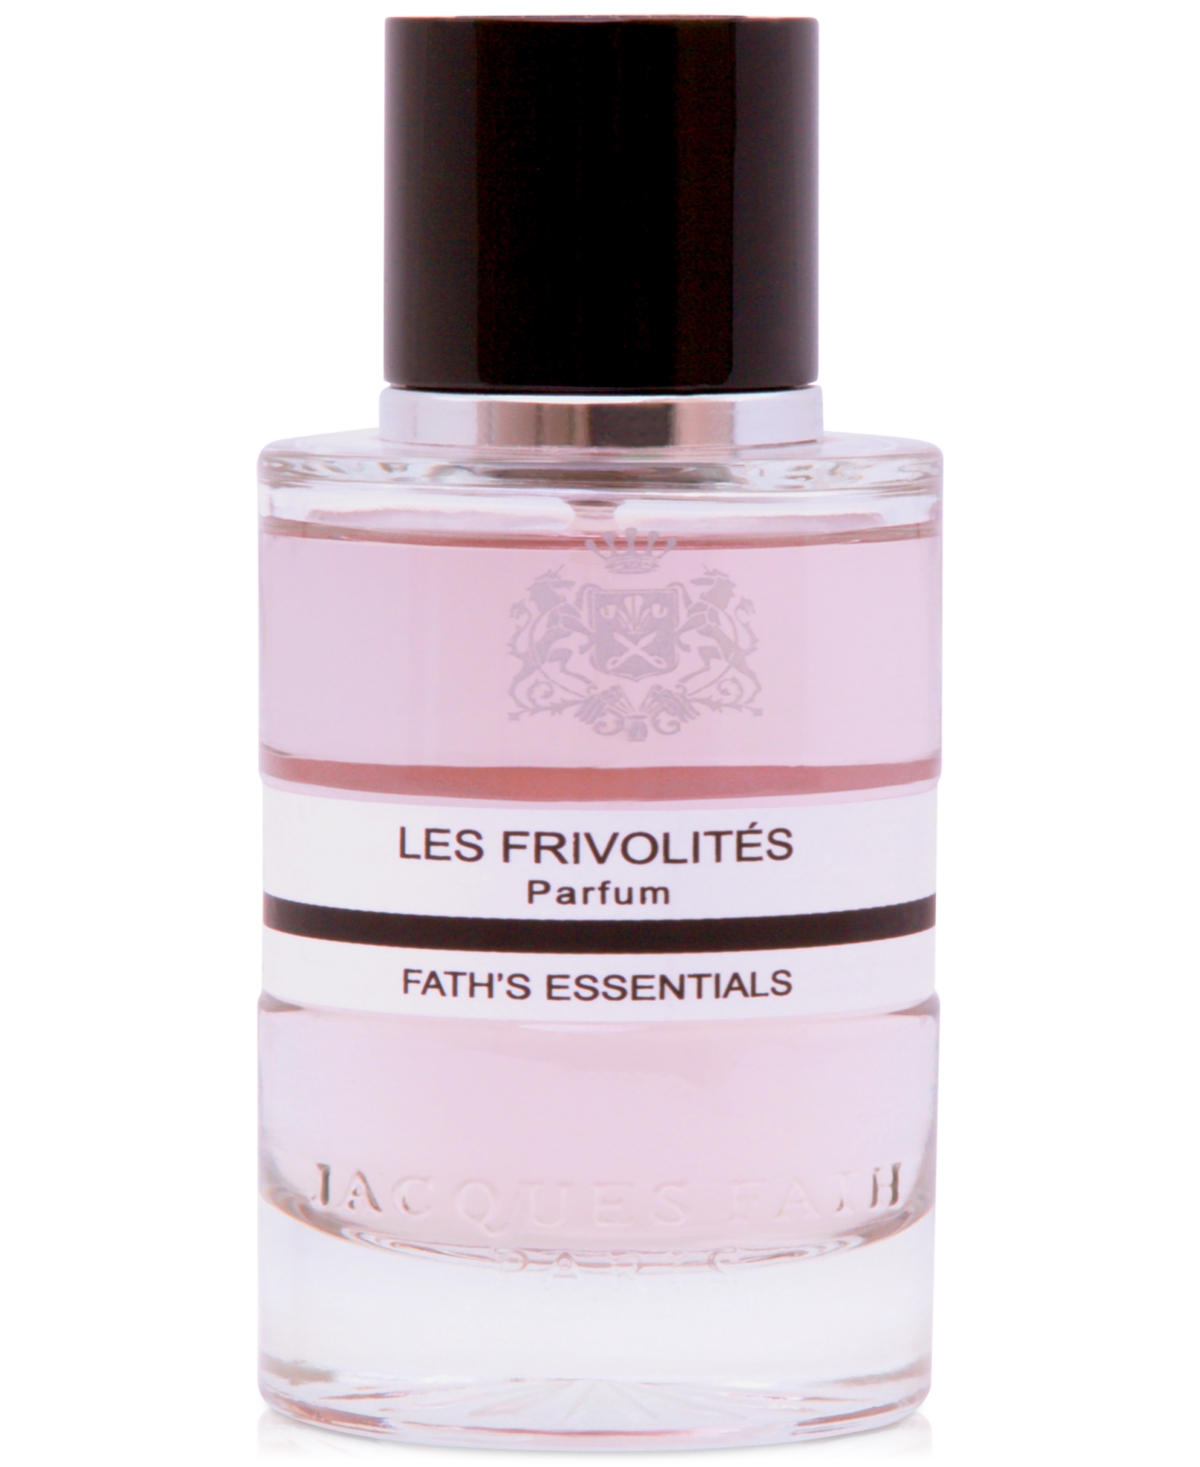 Les Frivolites Parfum, 3.4 oz.